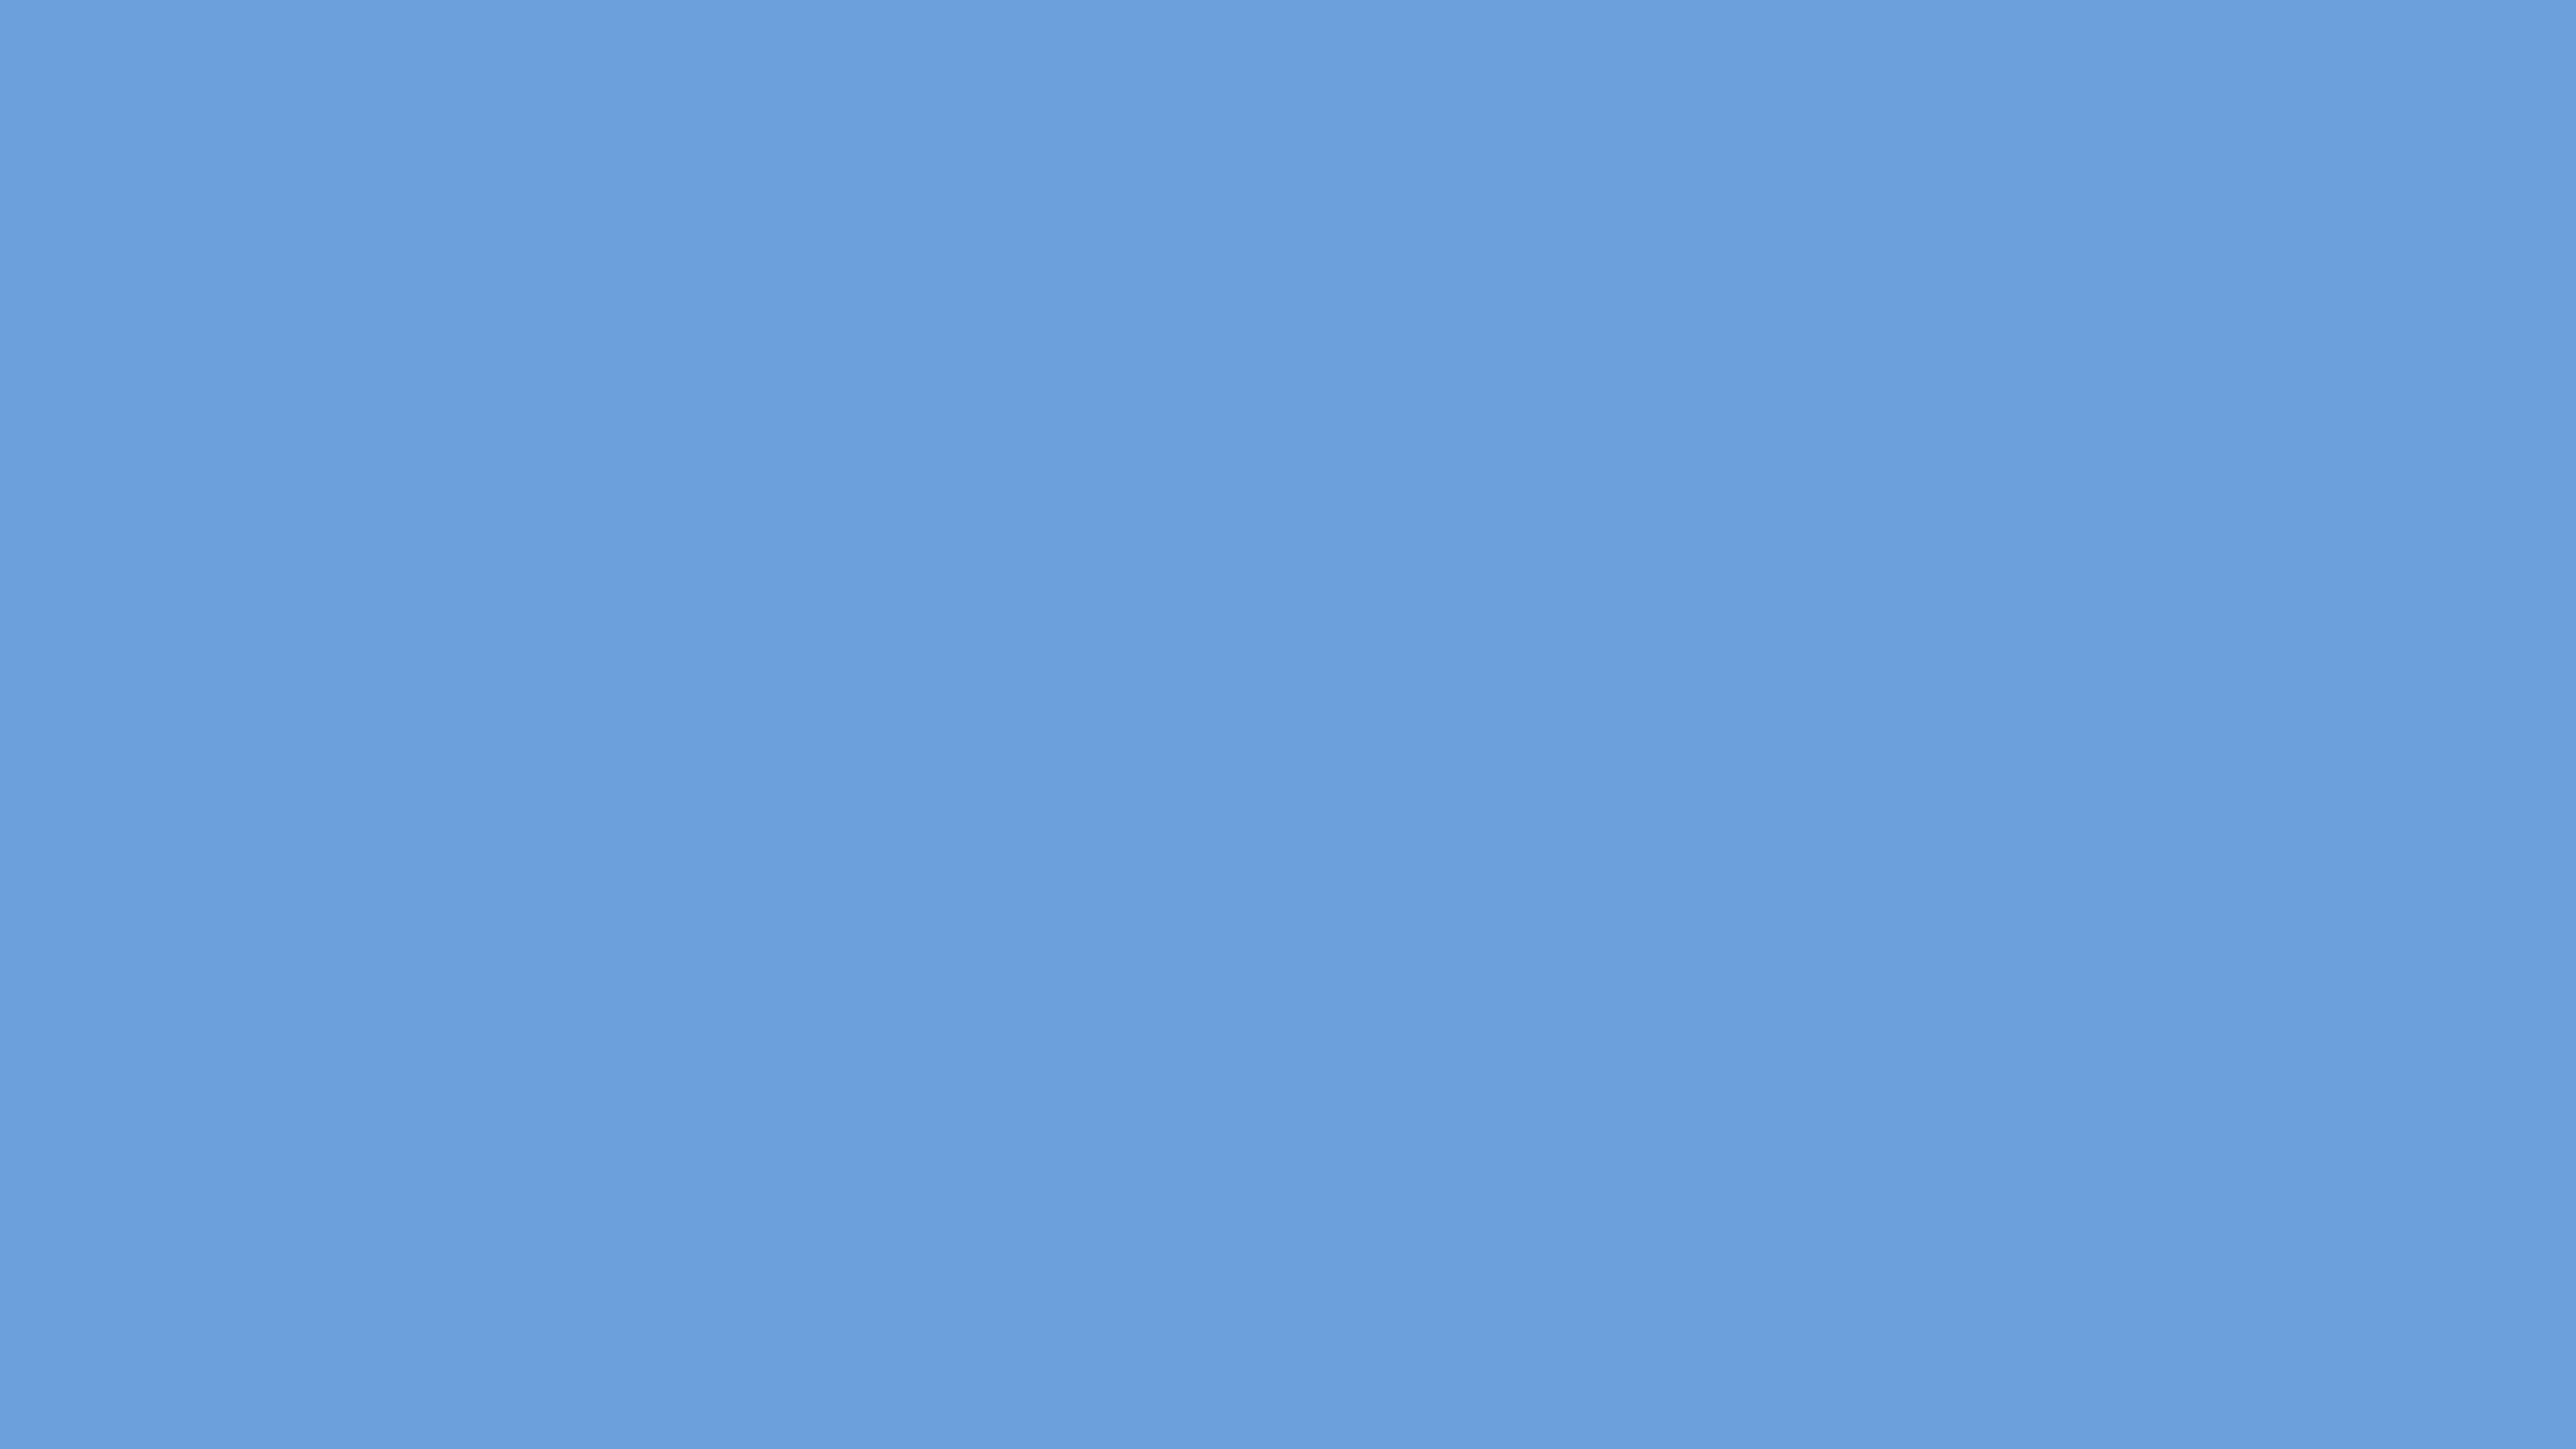 7680x4320 Little Boy Blue Solid Color Background